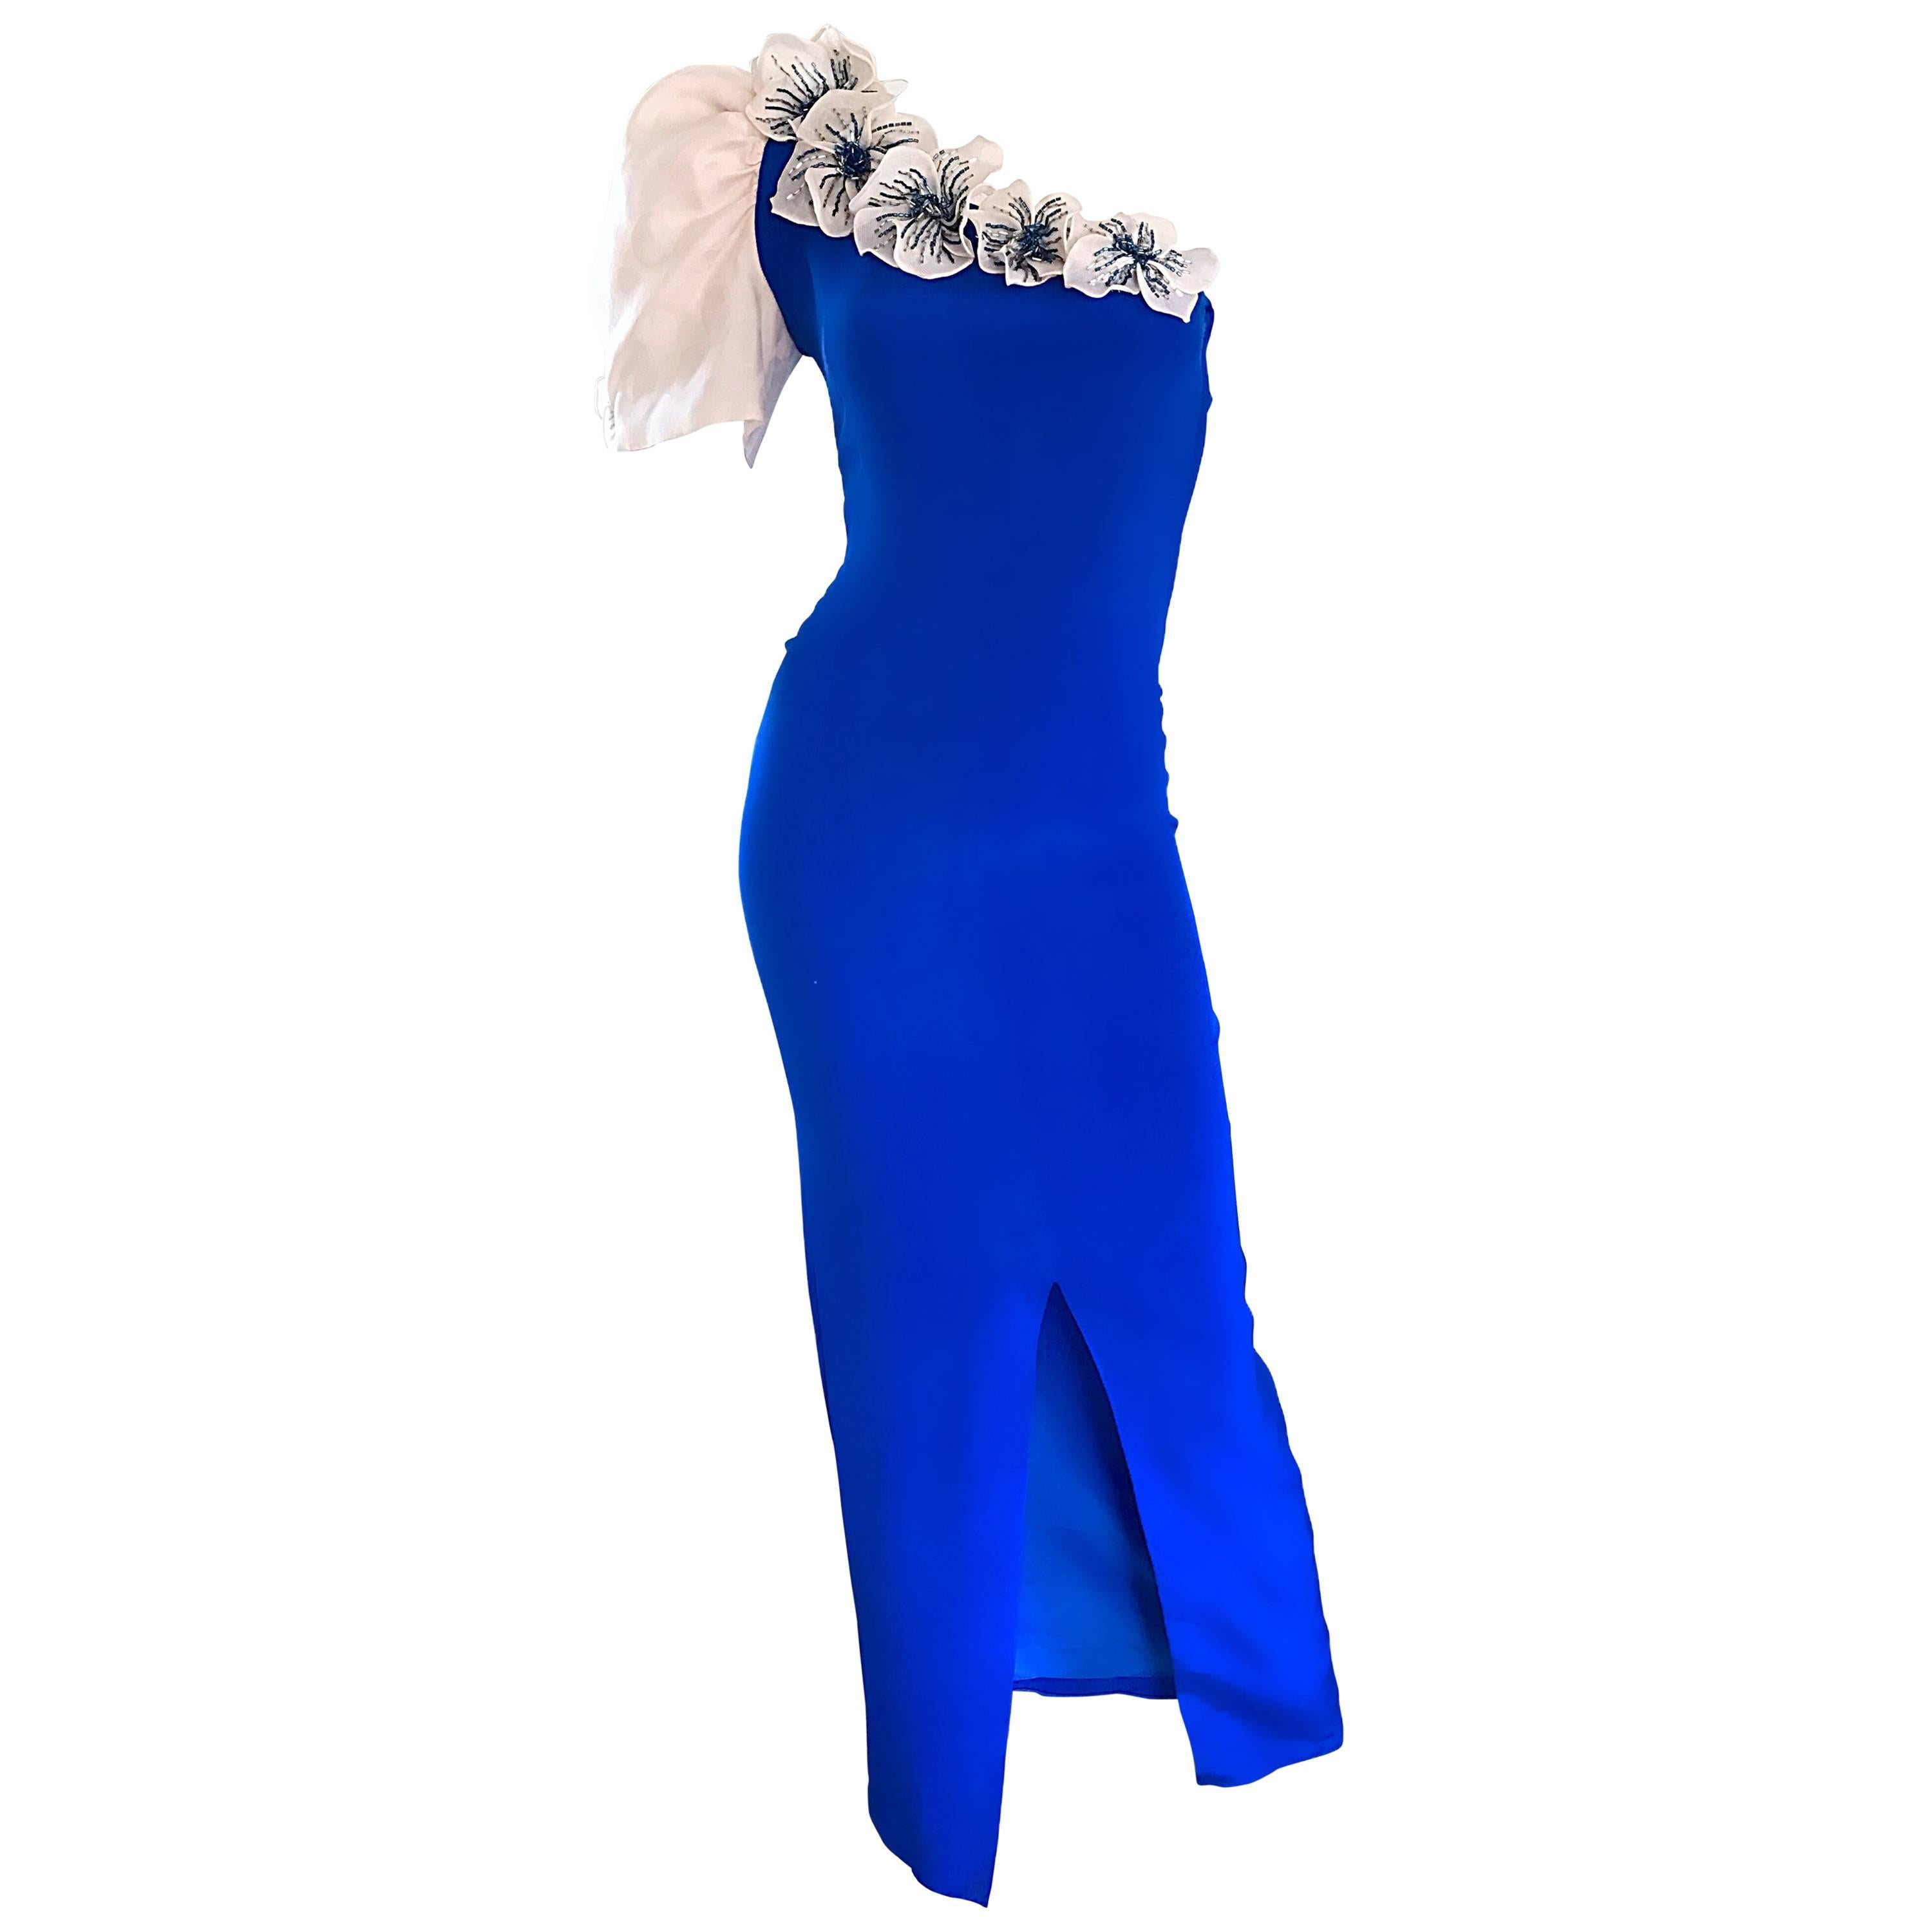 Amazing Vintage Couture Royal Blue One Shoulder Avant Garde Evening Gown / Dress